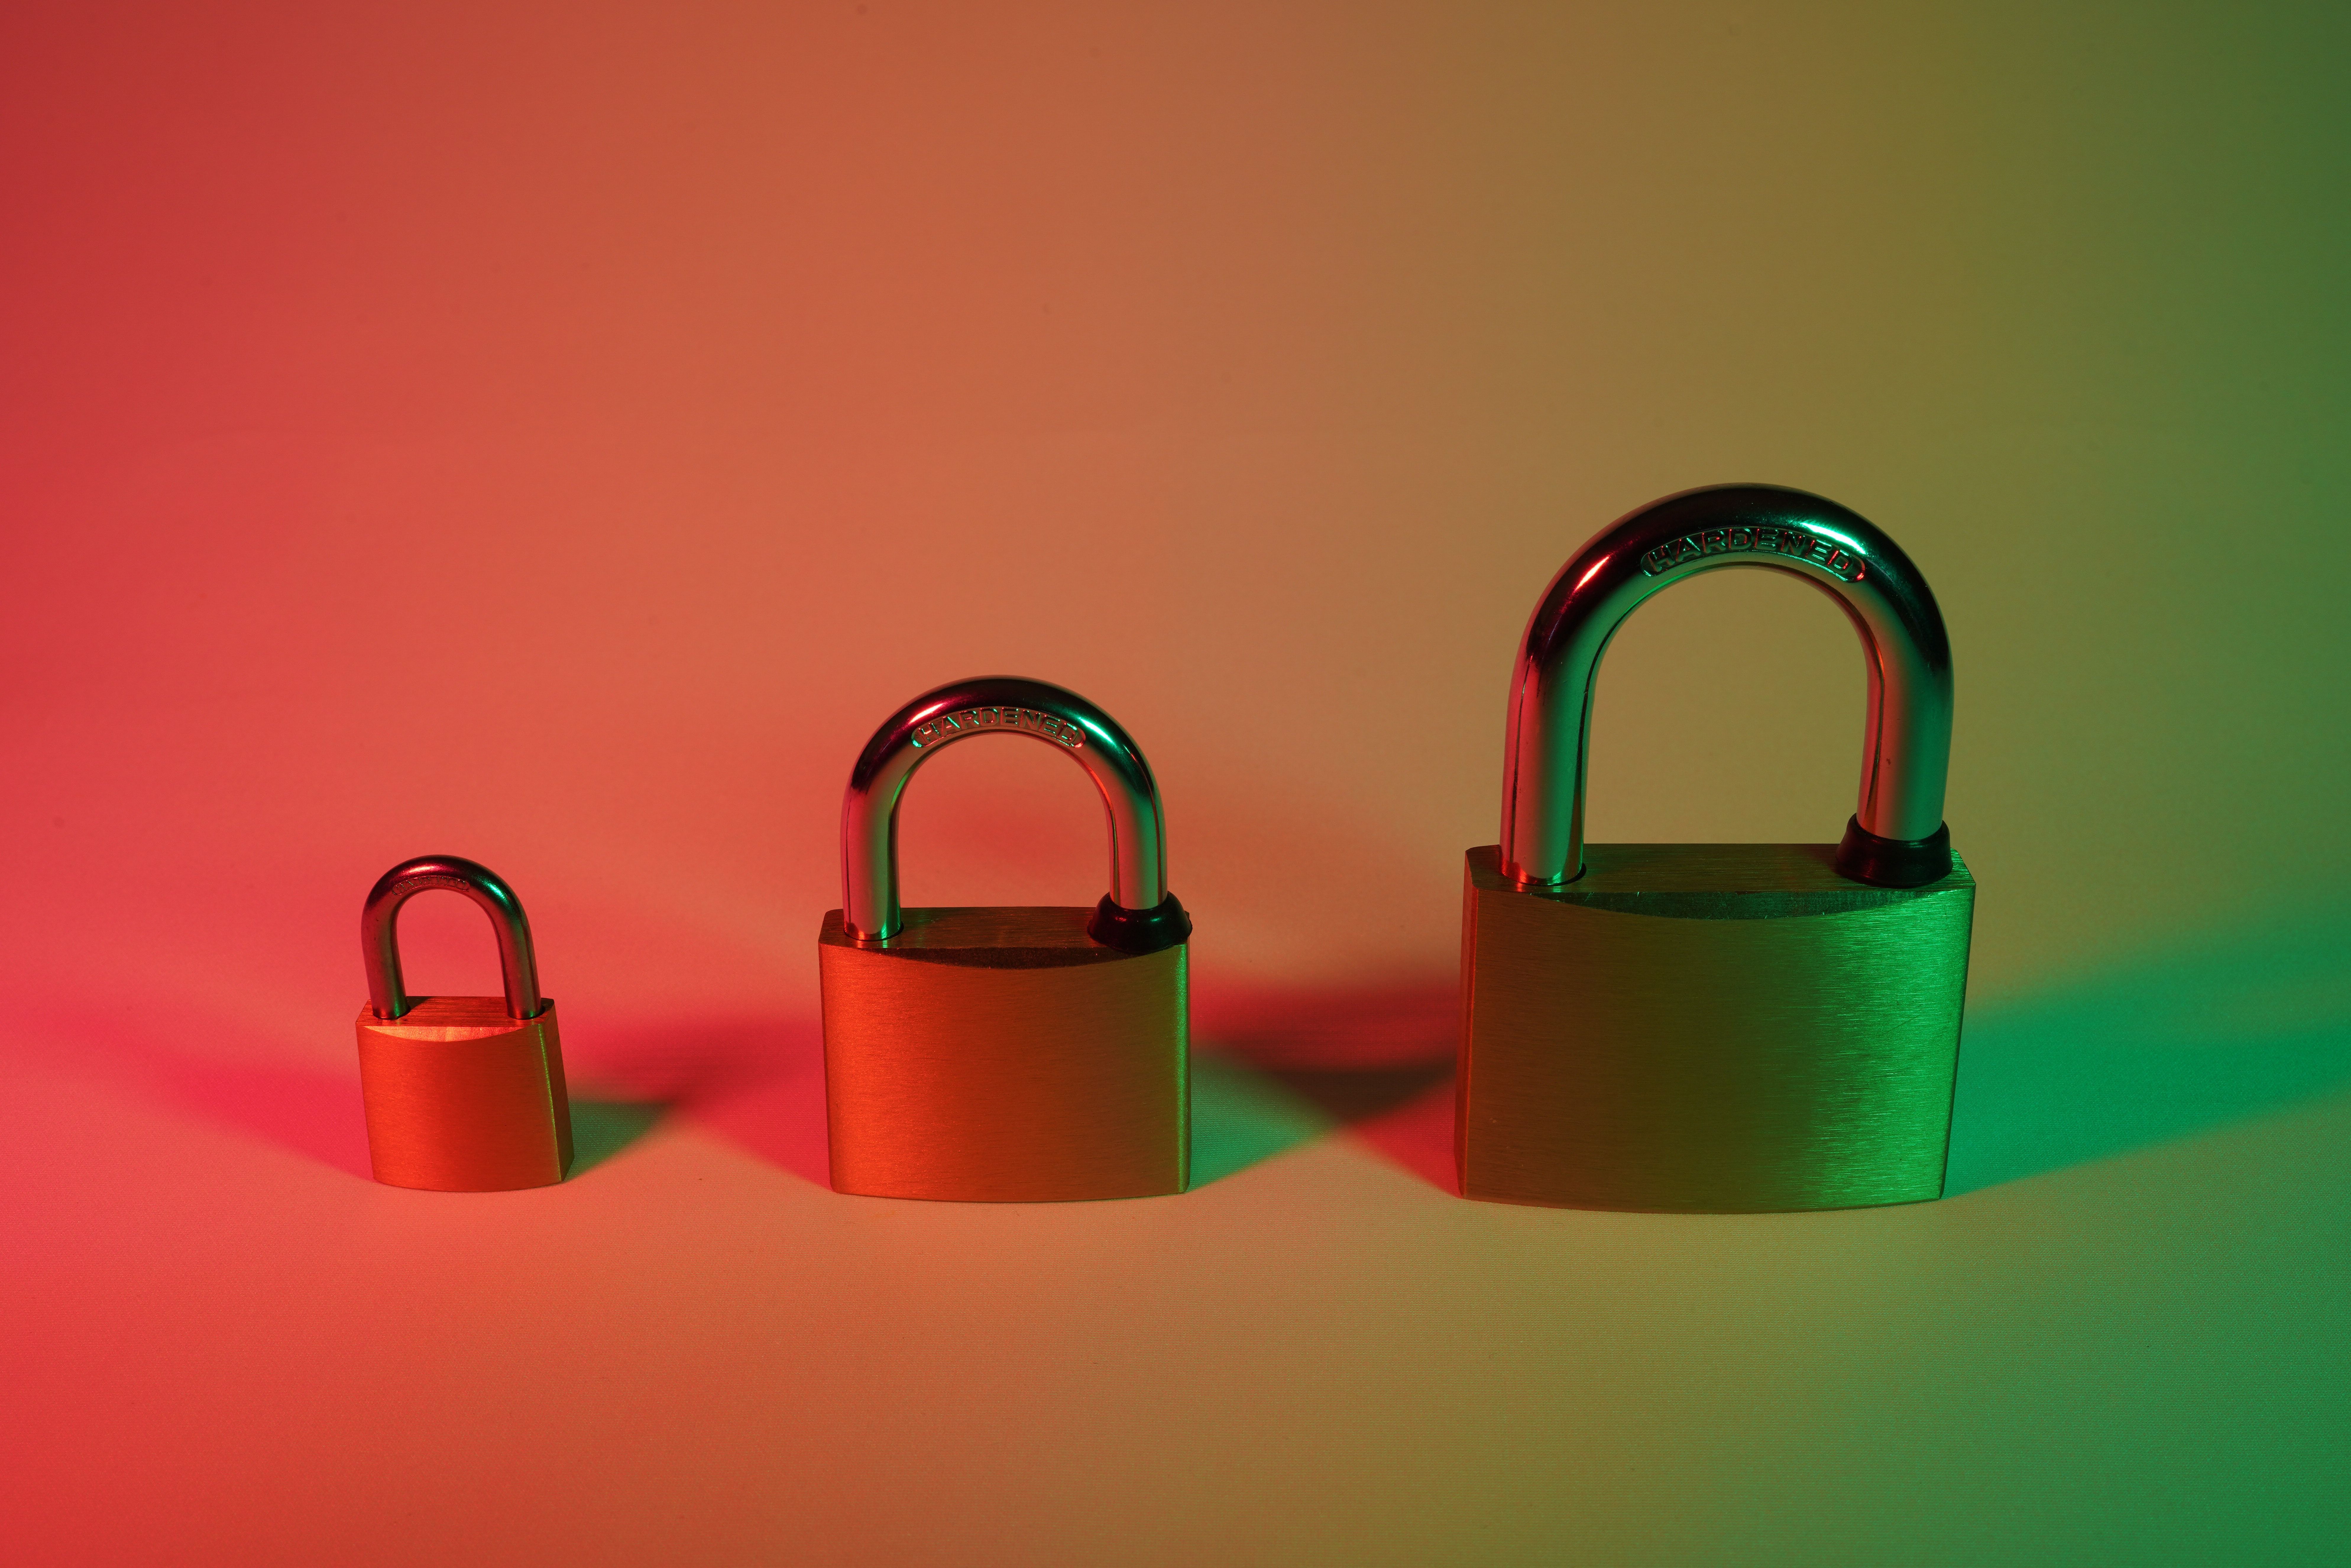 Unsplash stock image of three padlocks - one small, one medium, one large - on a table under red gradient light